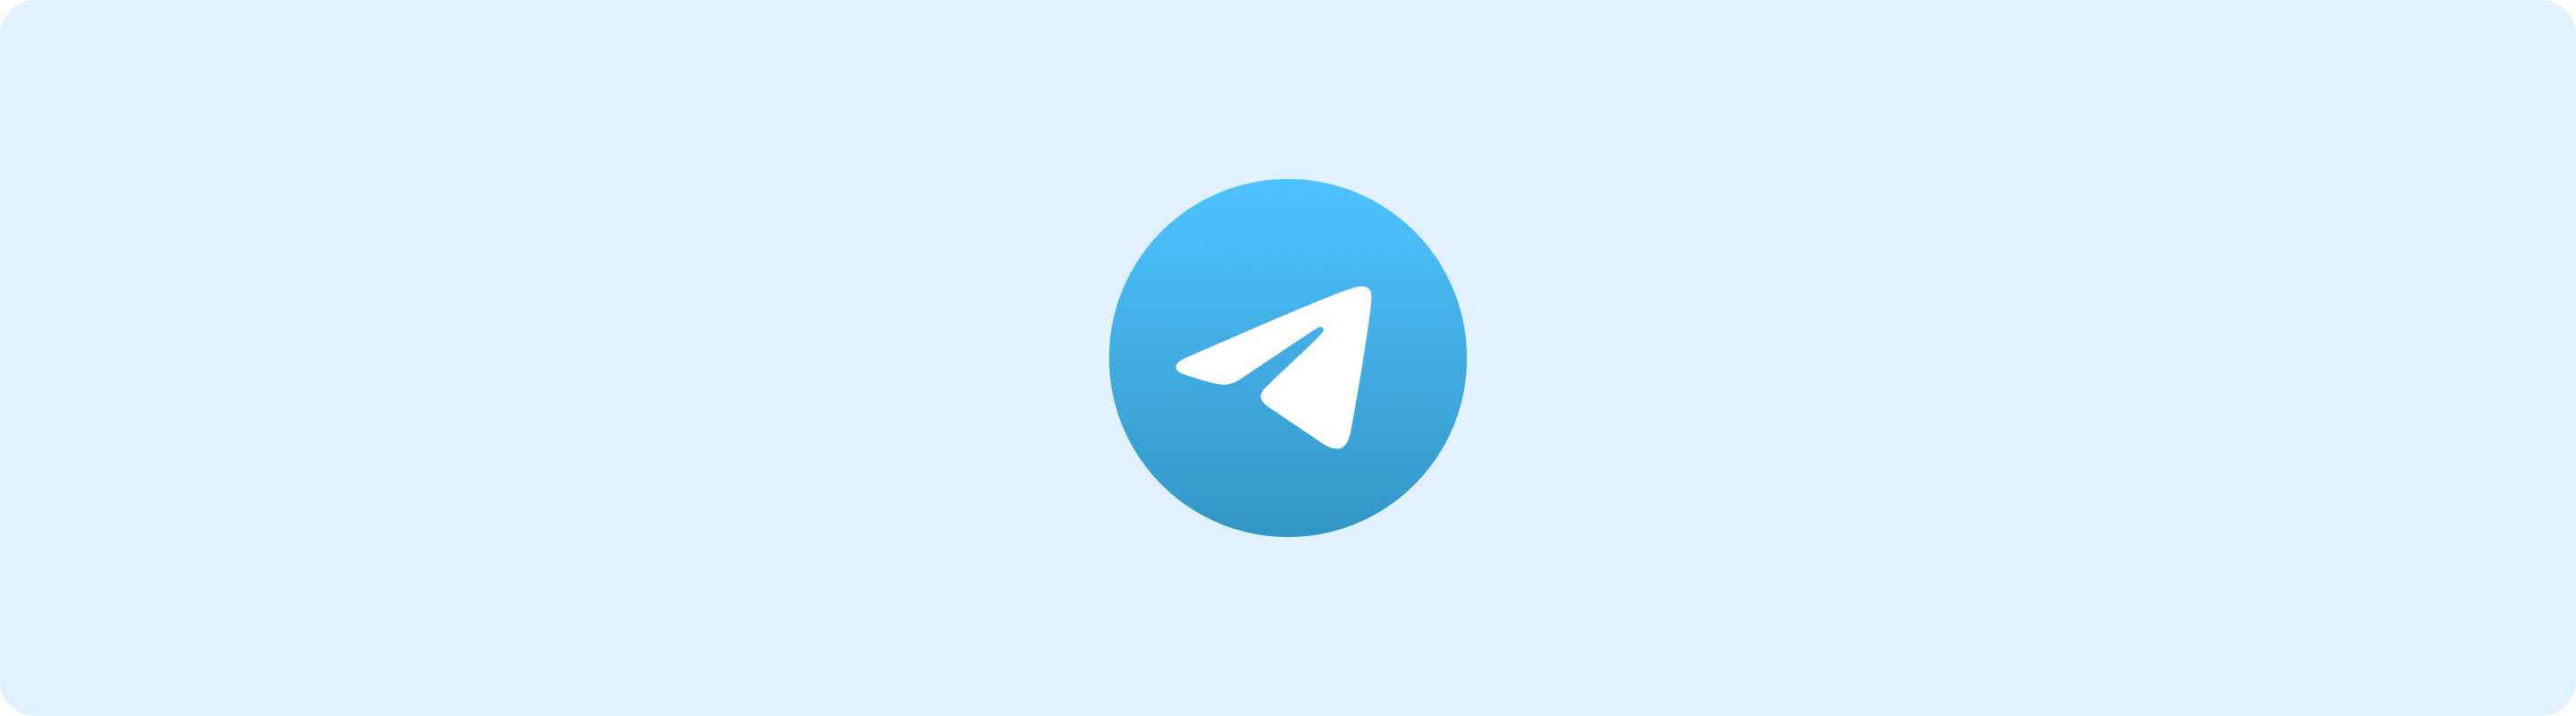 Instant Messaging für Unternehmen - Telegram.png